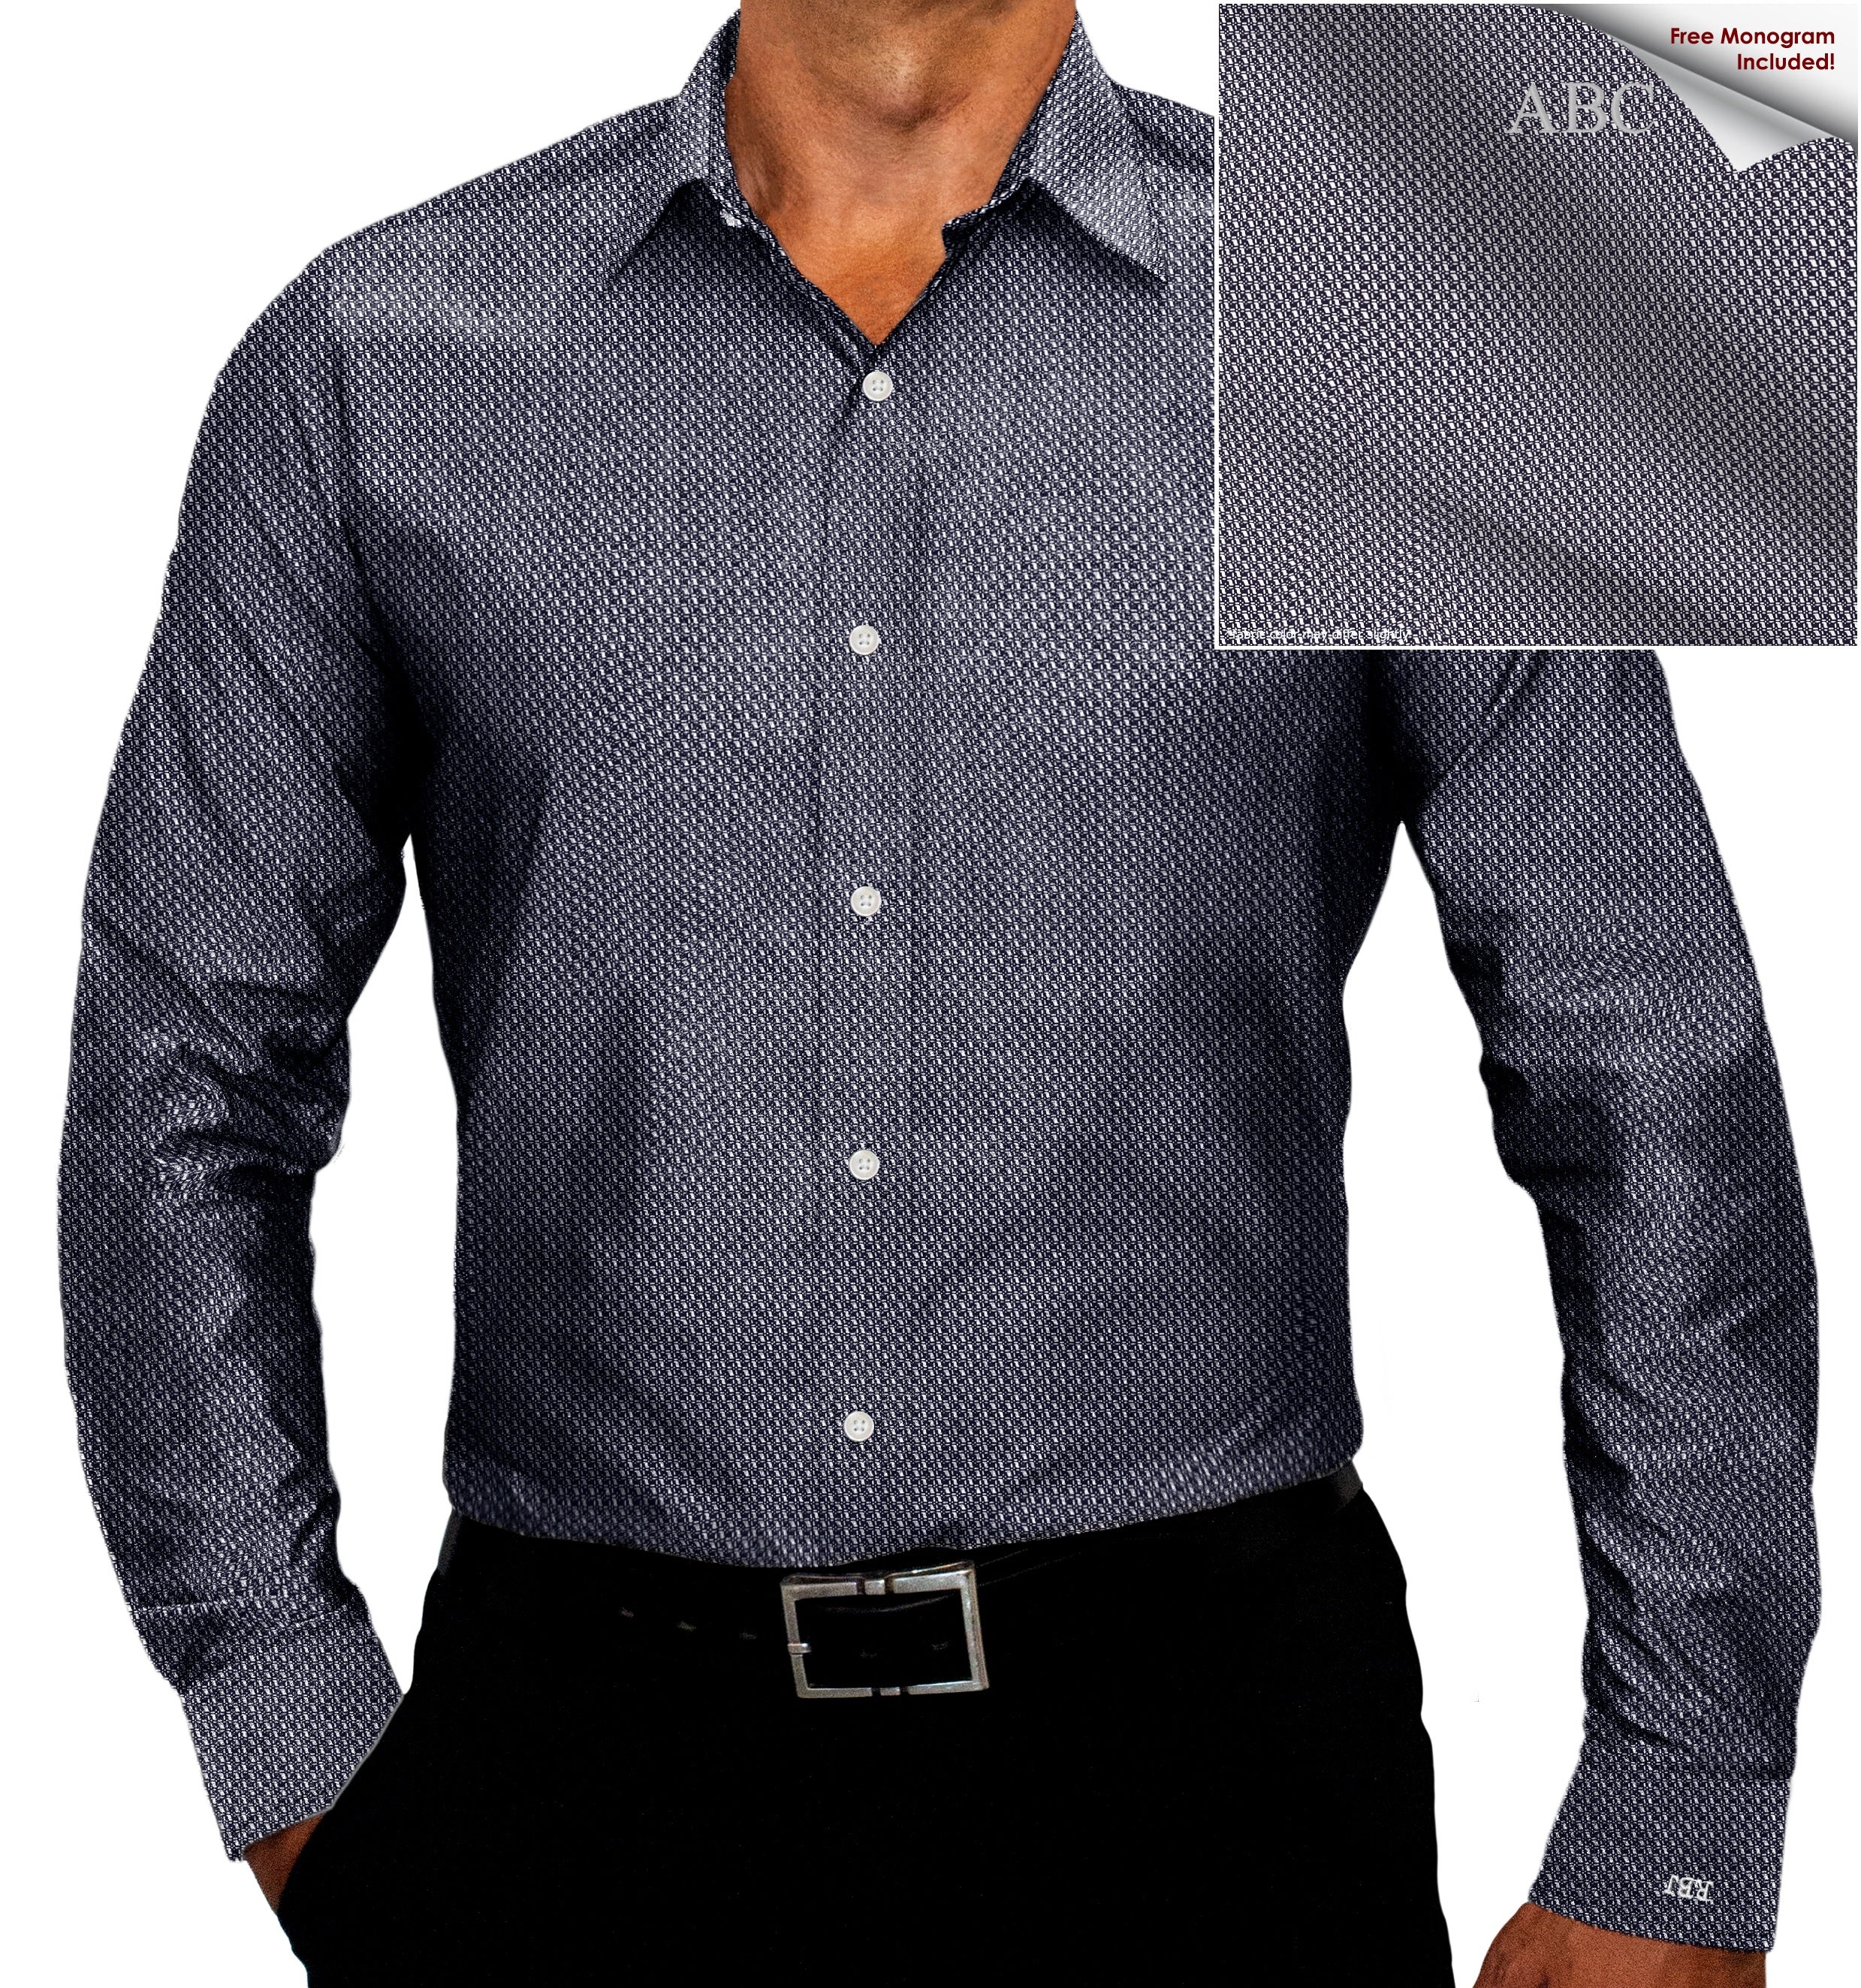 Black/White Texture Button Down Dress Shirt  (NF23)